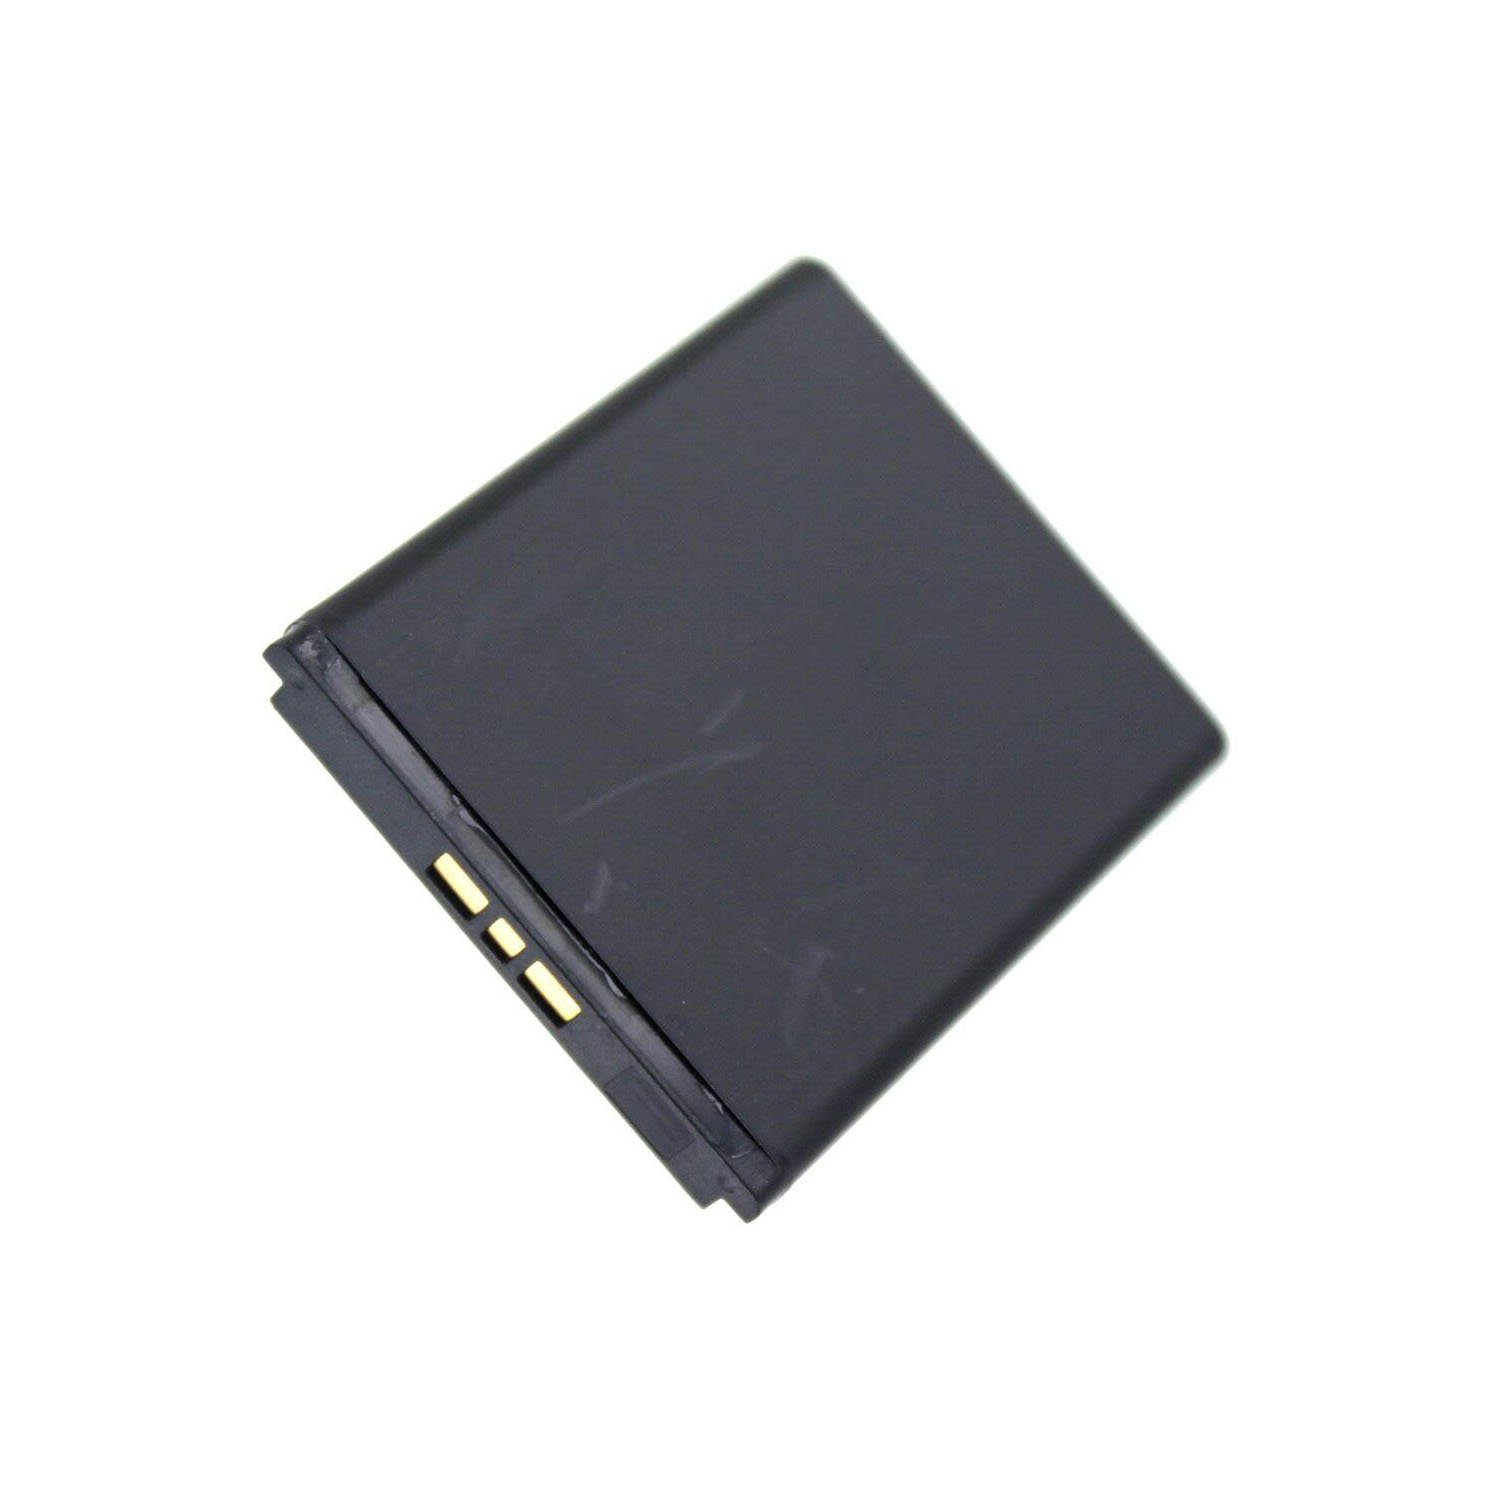 AGI Akku kompatibel mit Sony Ericsson W110I, F305, G502, G700, G900 Akku Akku